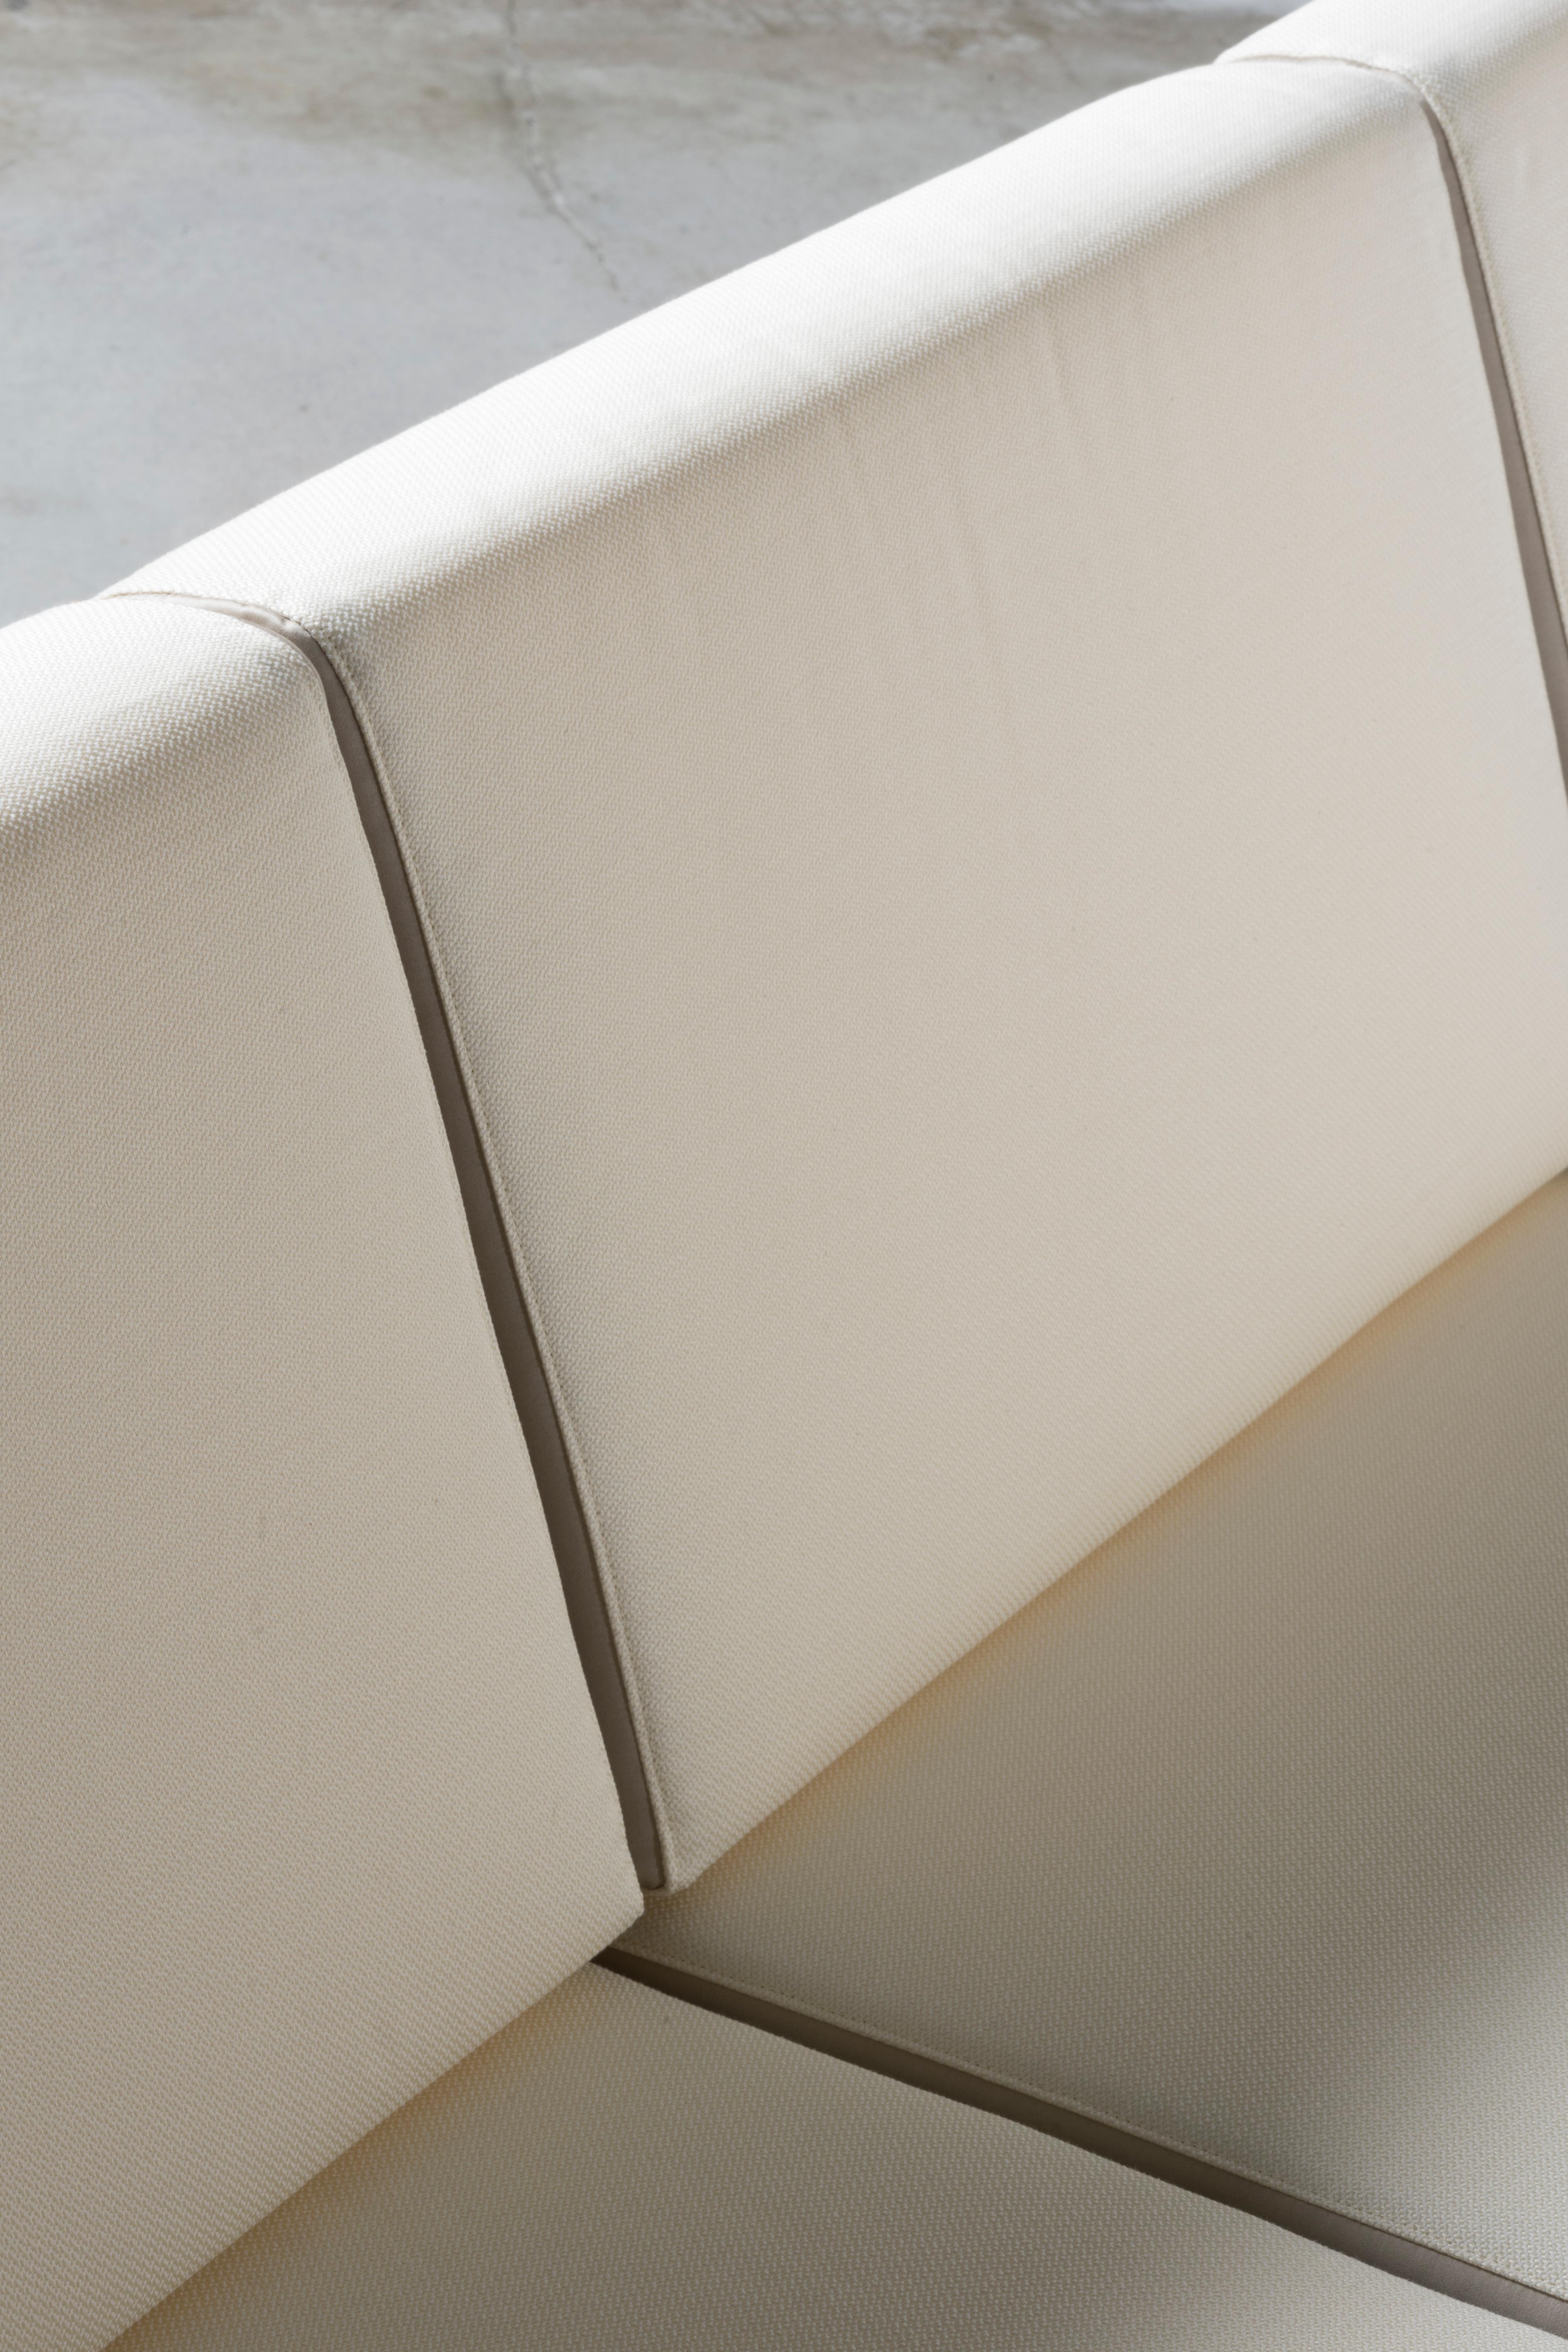 Mid-Century Modern Lounge Sofa Manufactured by Lyceu de Artes e Officios For Sale